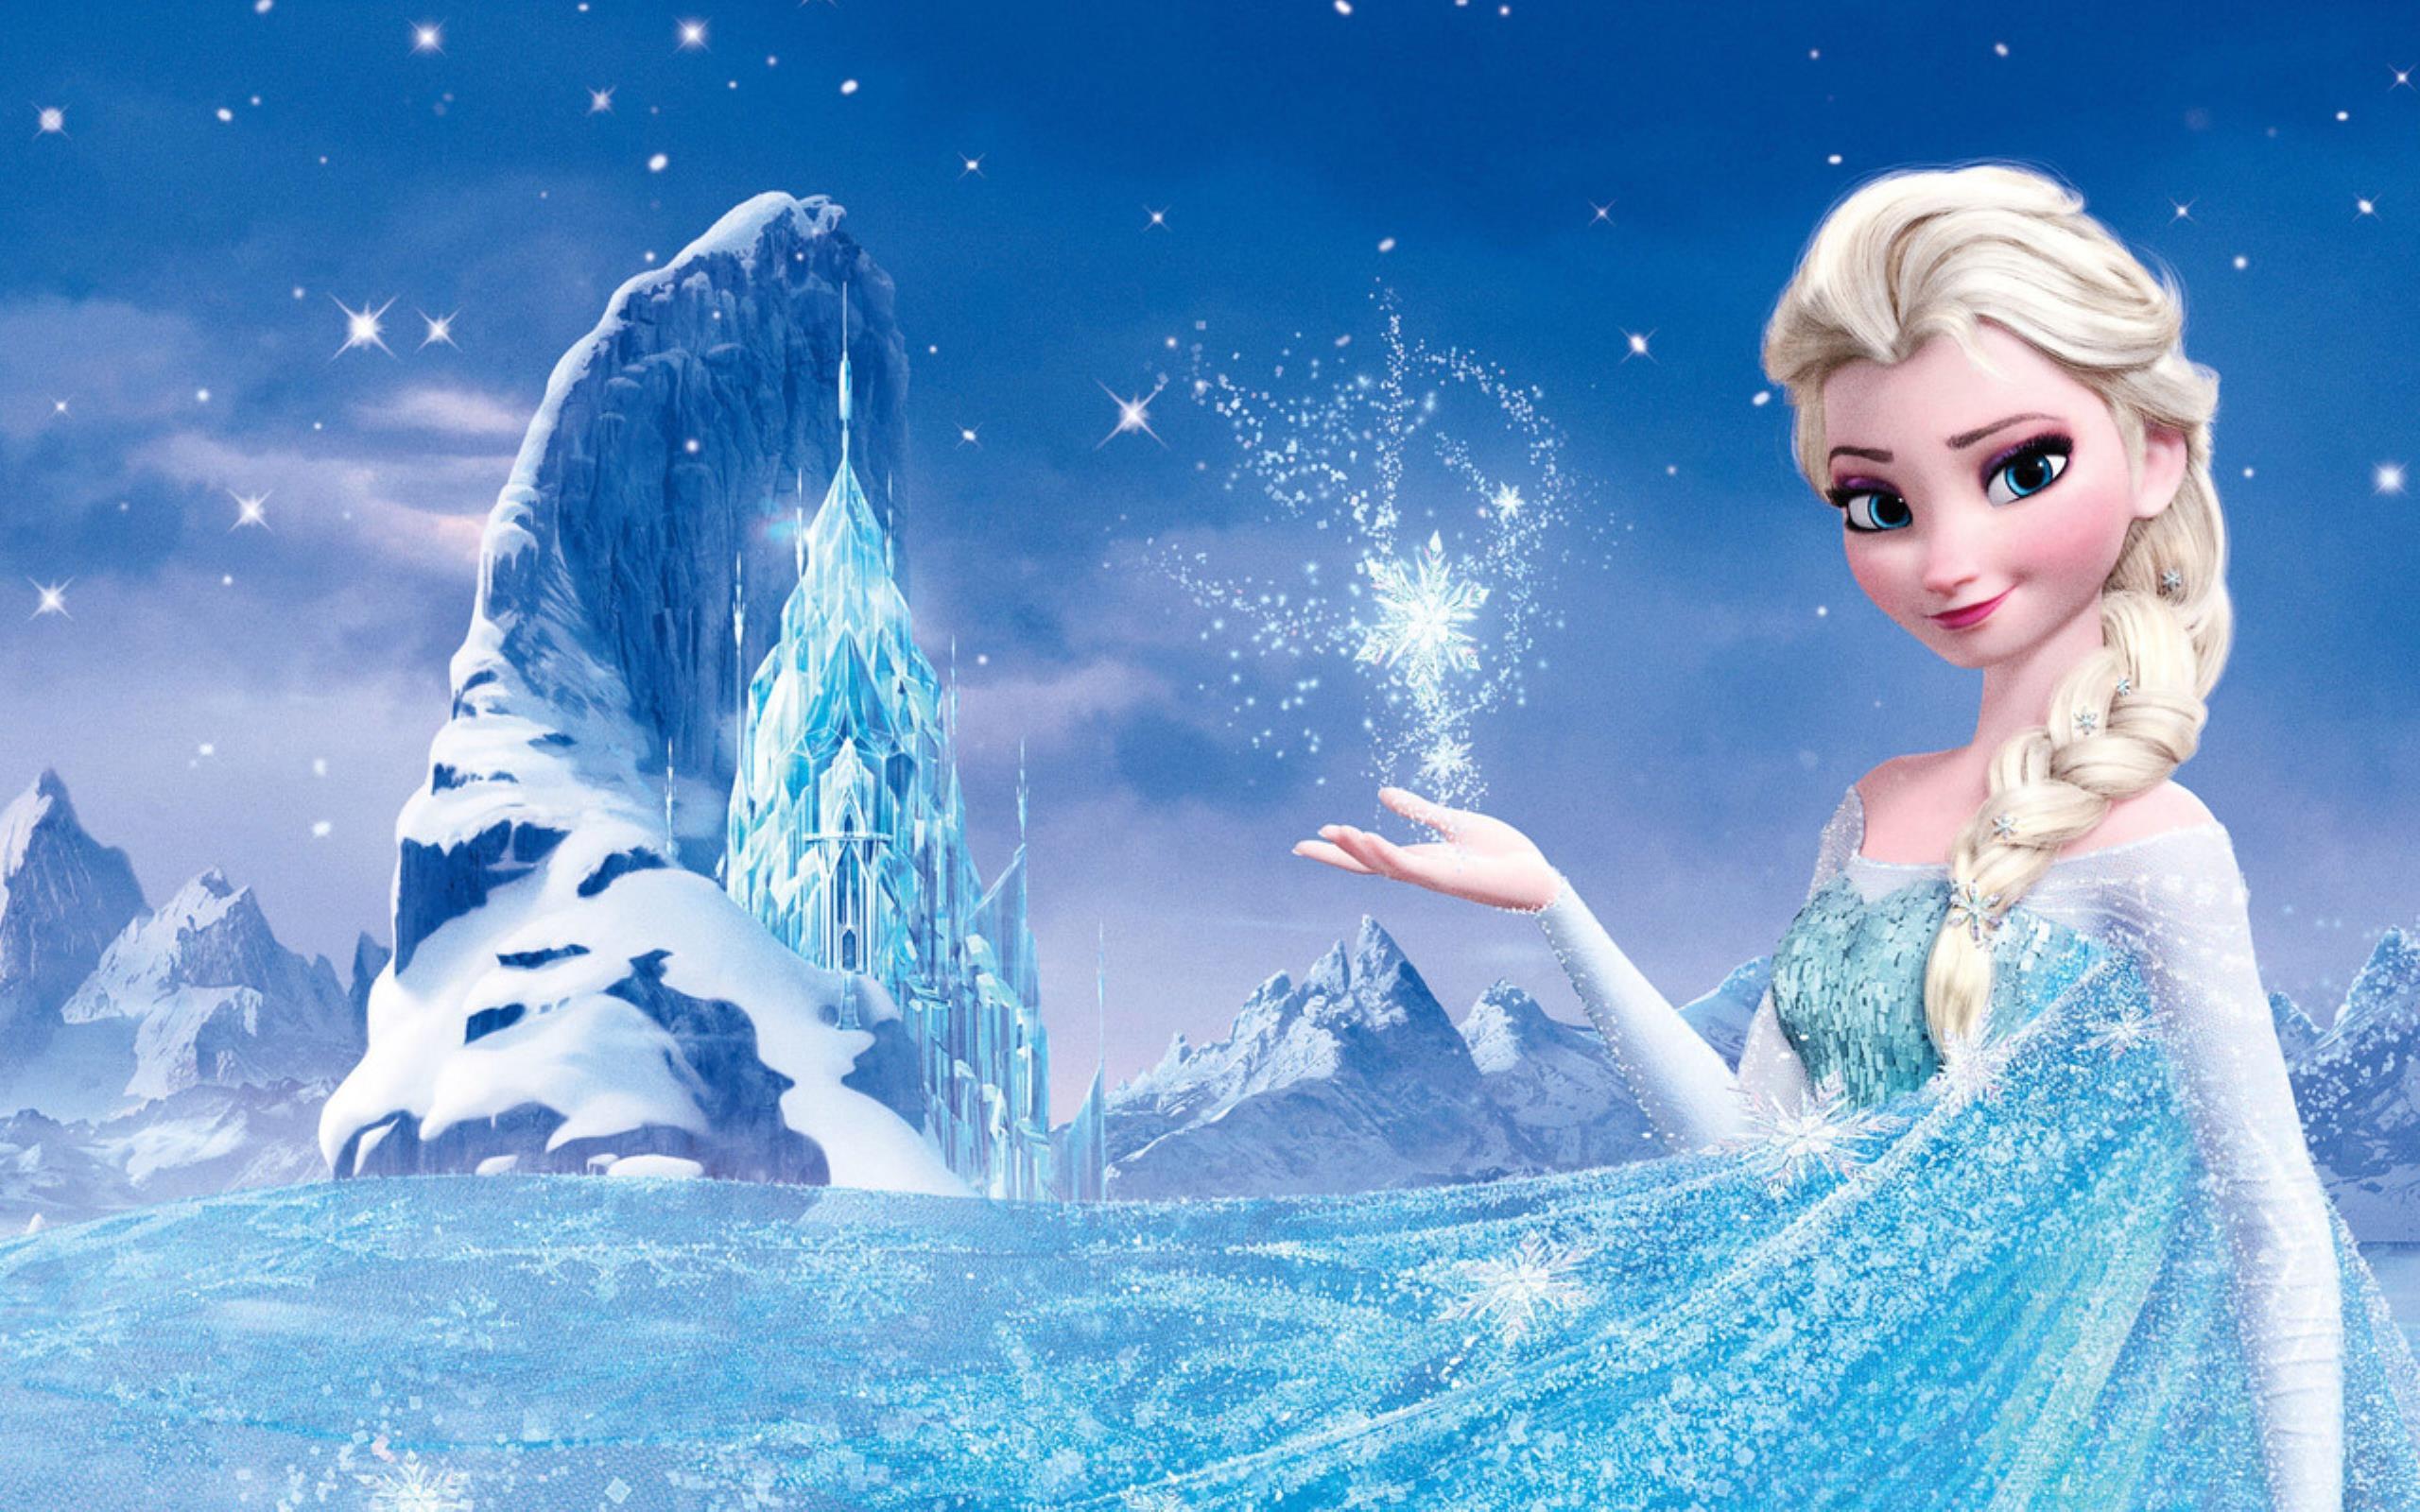 Frozen Fever Elsa Wallpaper